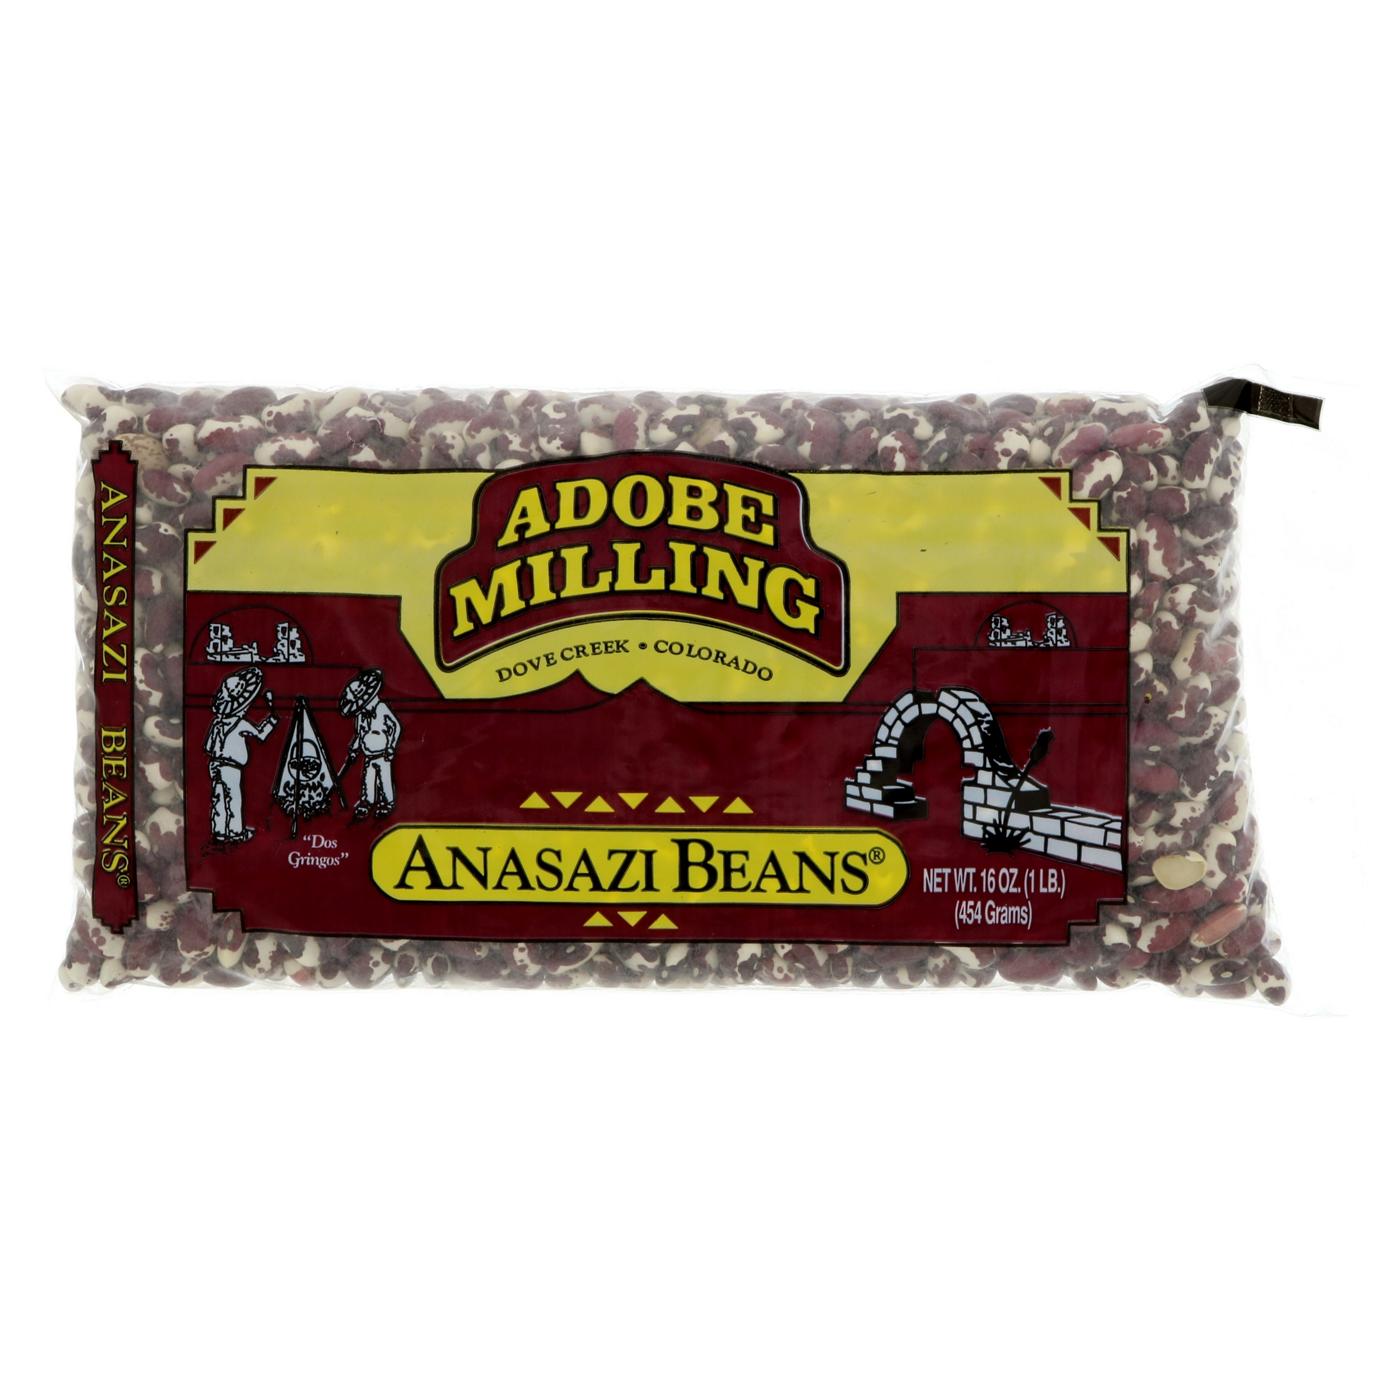 Adobe Milling Anasazi Beans; image 1 of 2